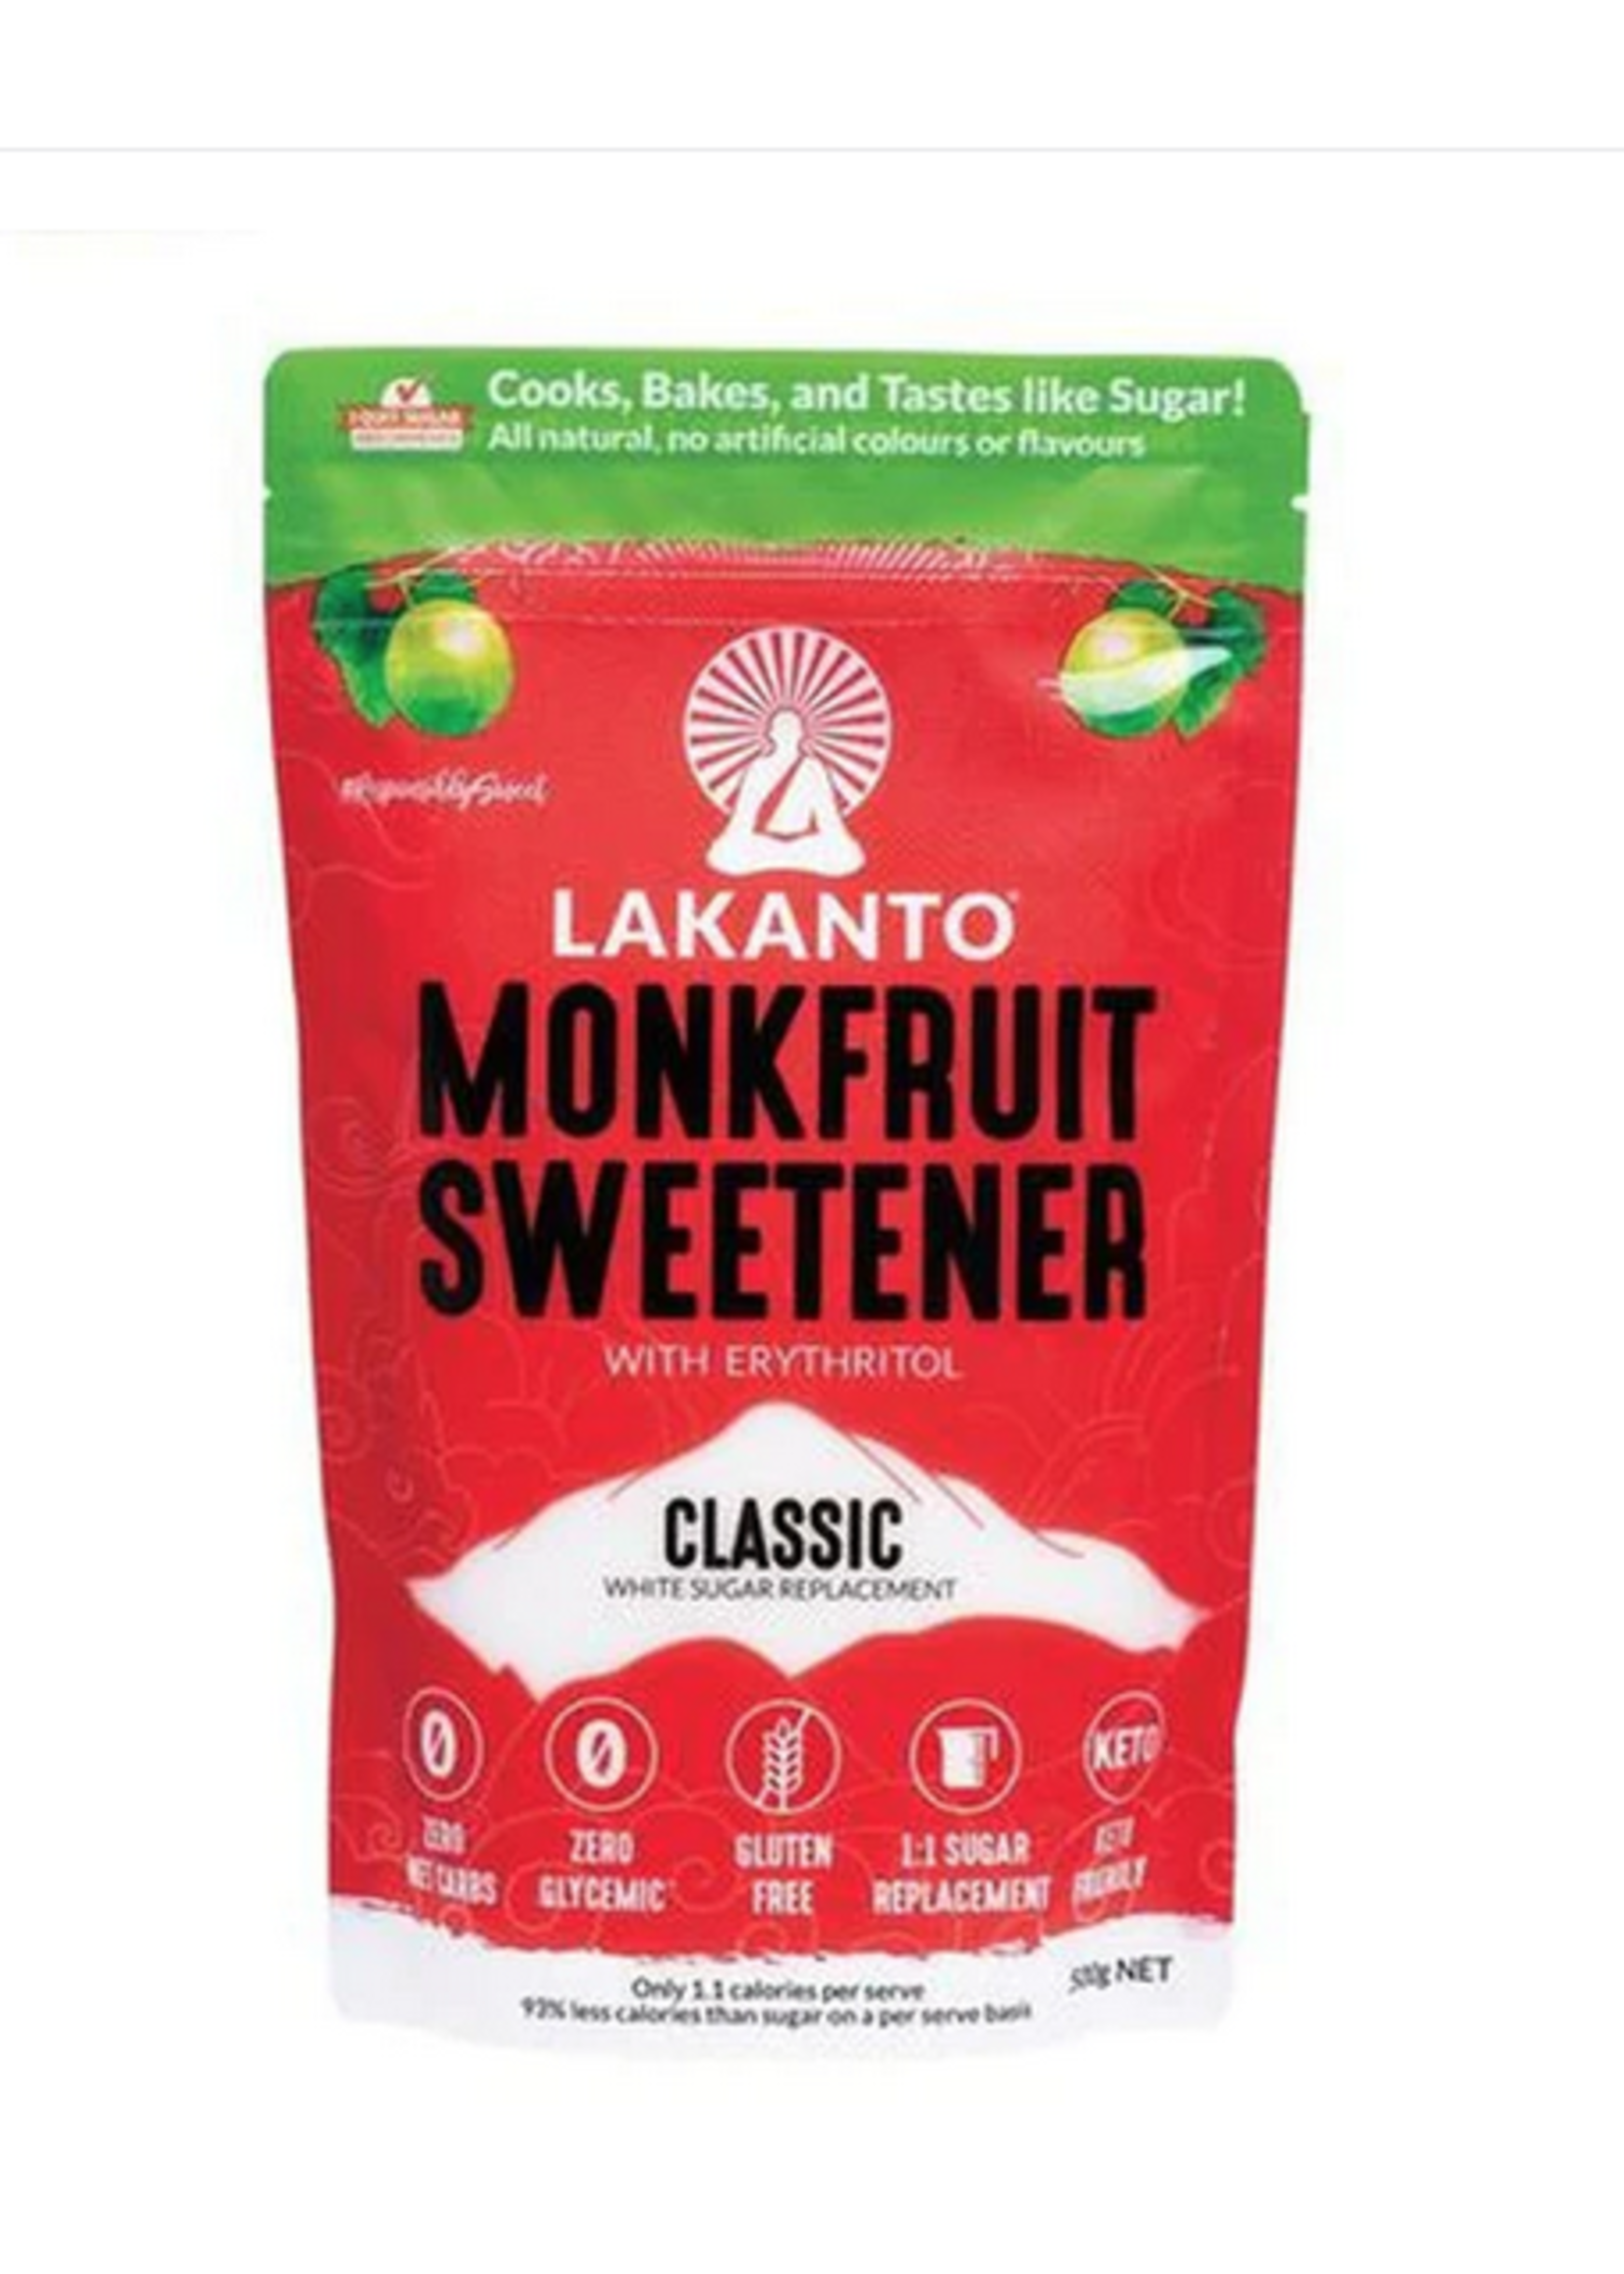 LAKANTO Monk Fruit Sweetener Classic - With Erythritol 500g